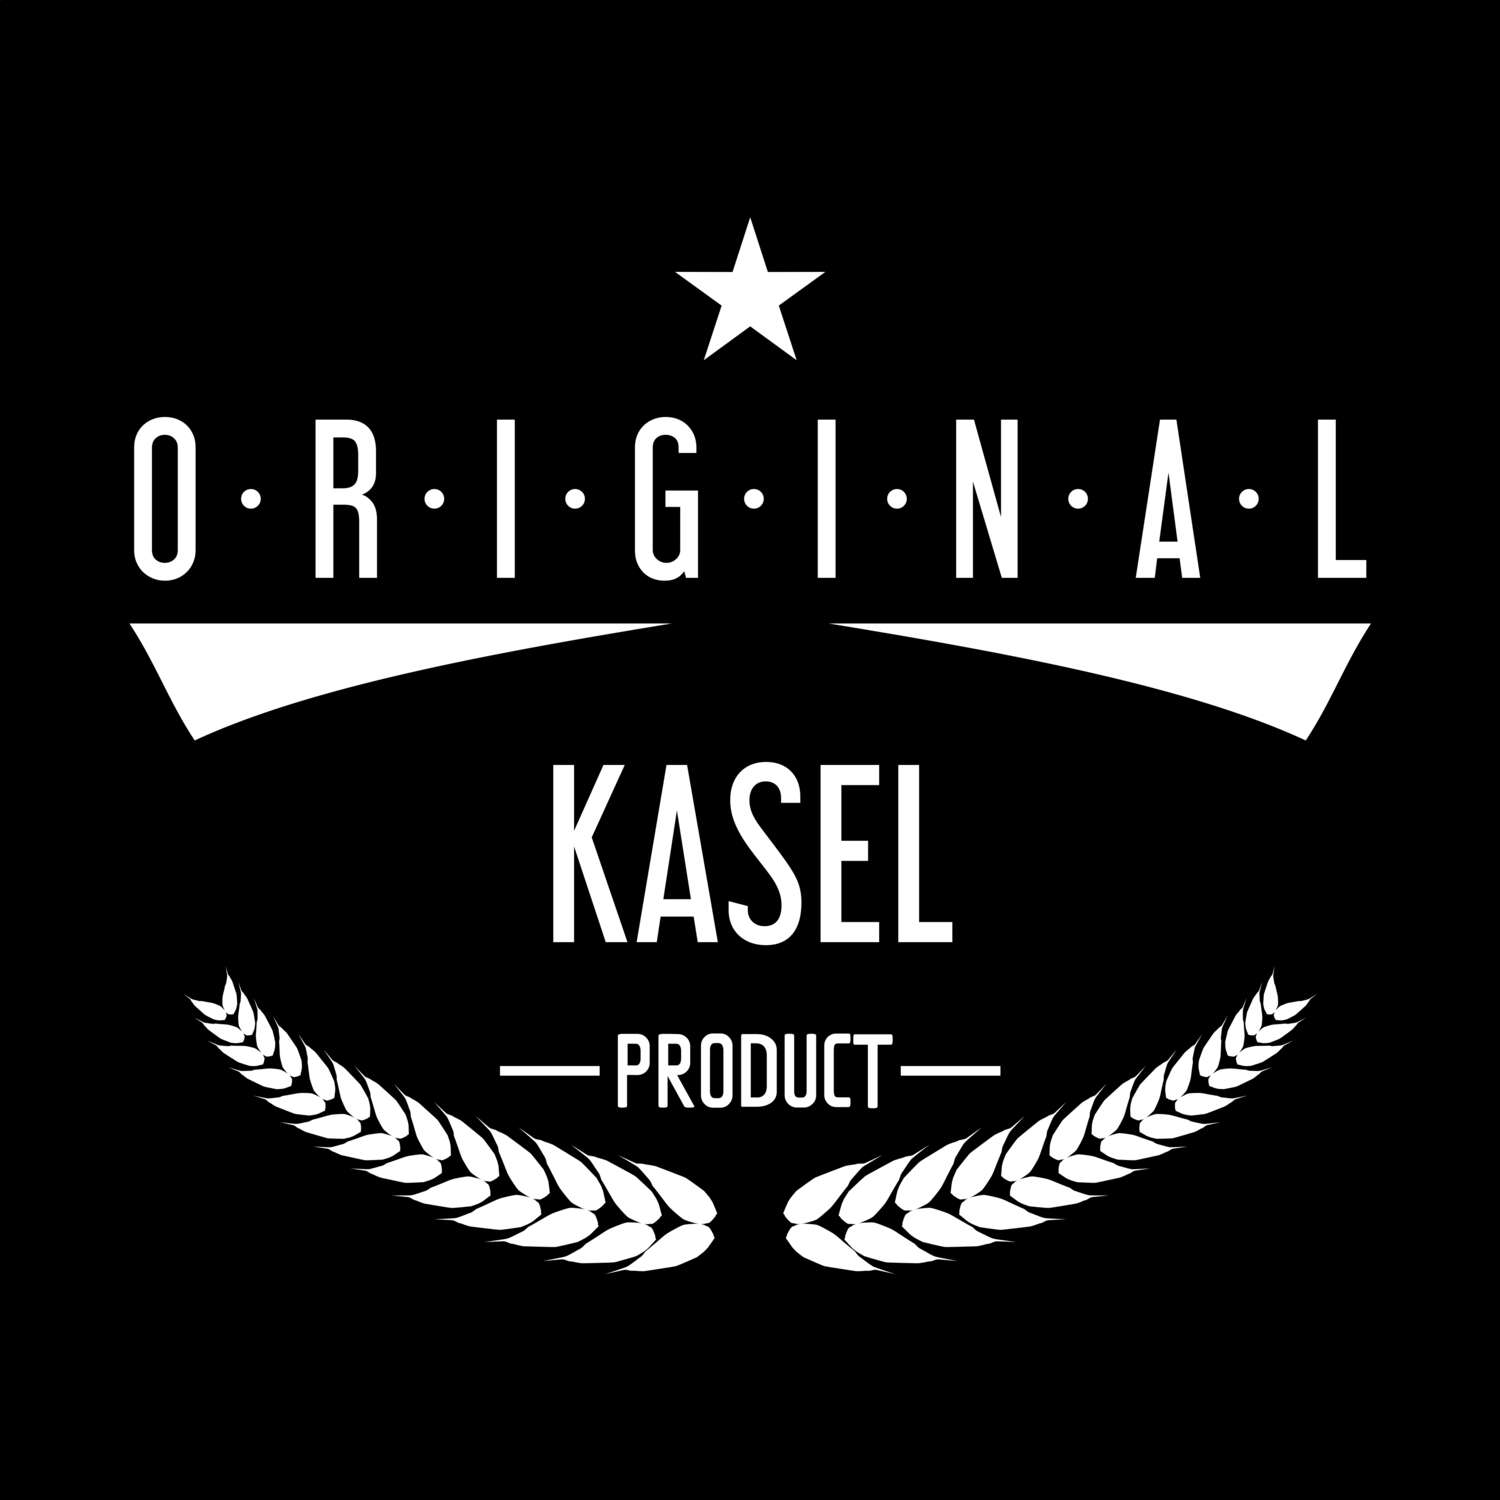 Kasel T-Shirt »Original Product«